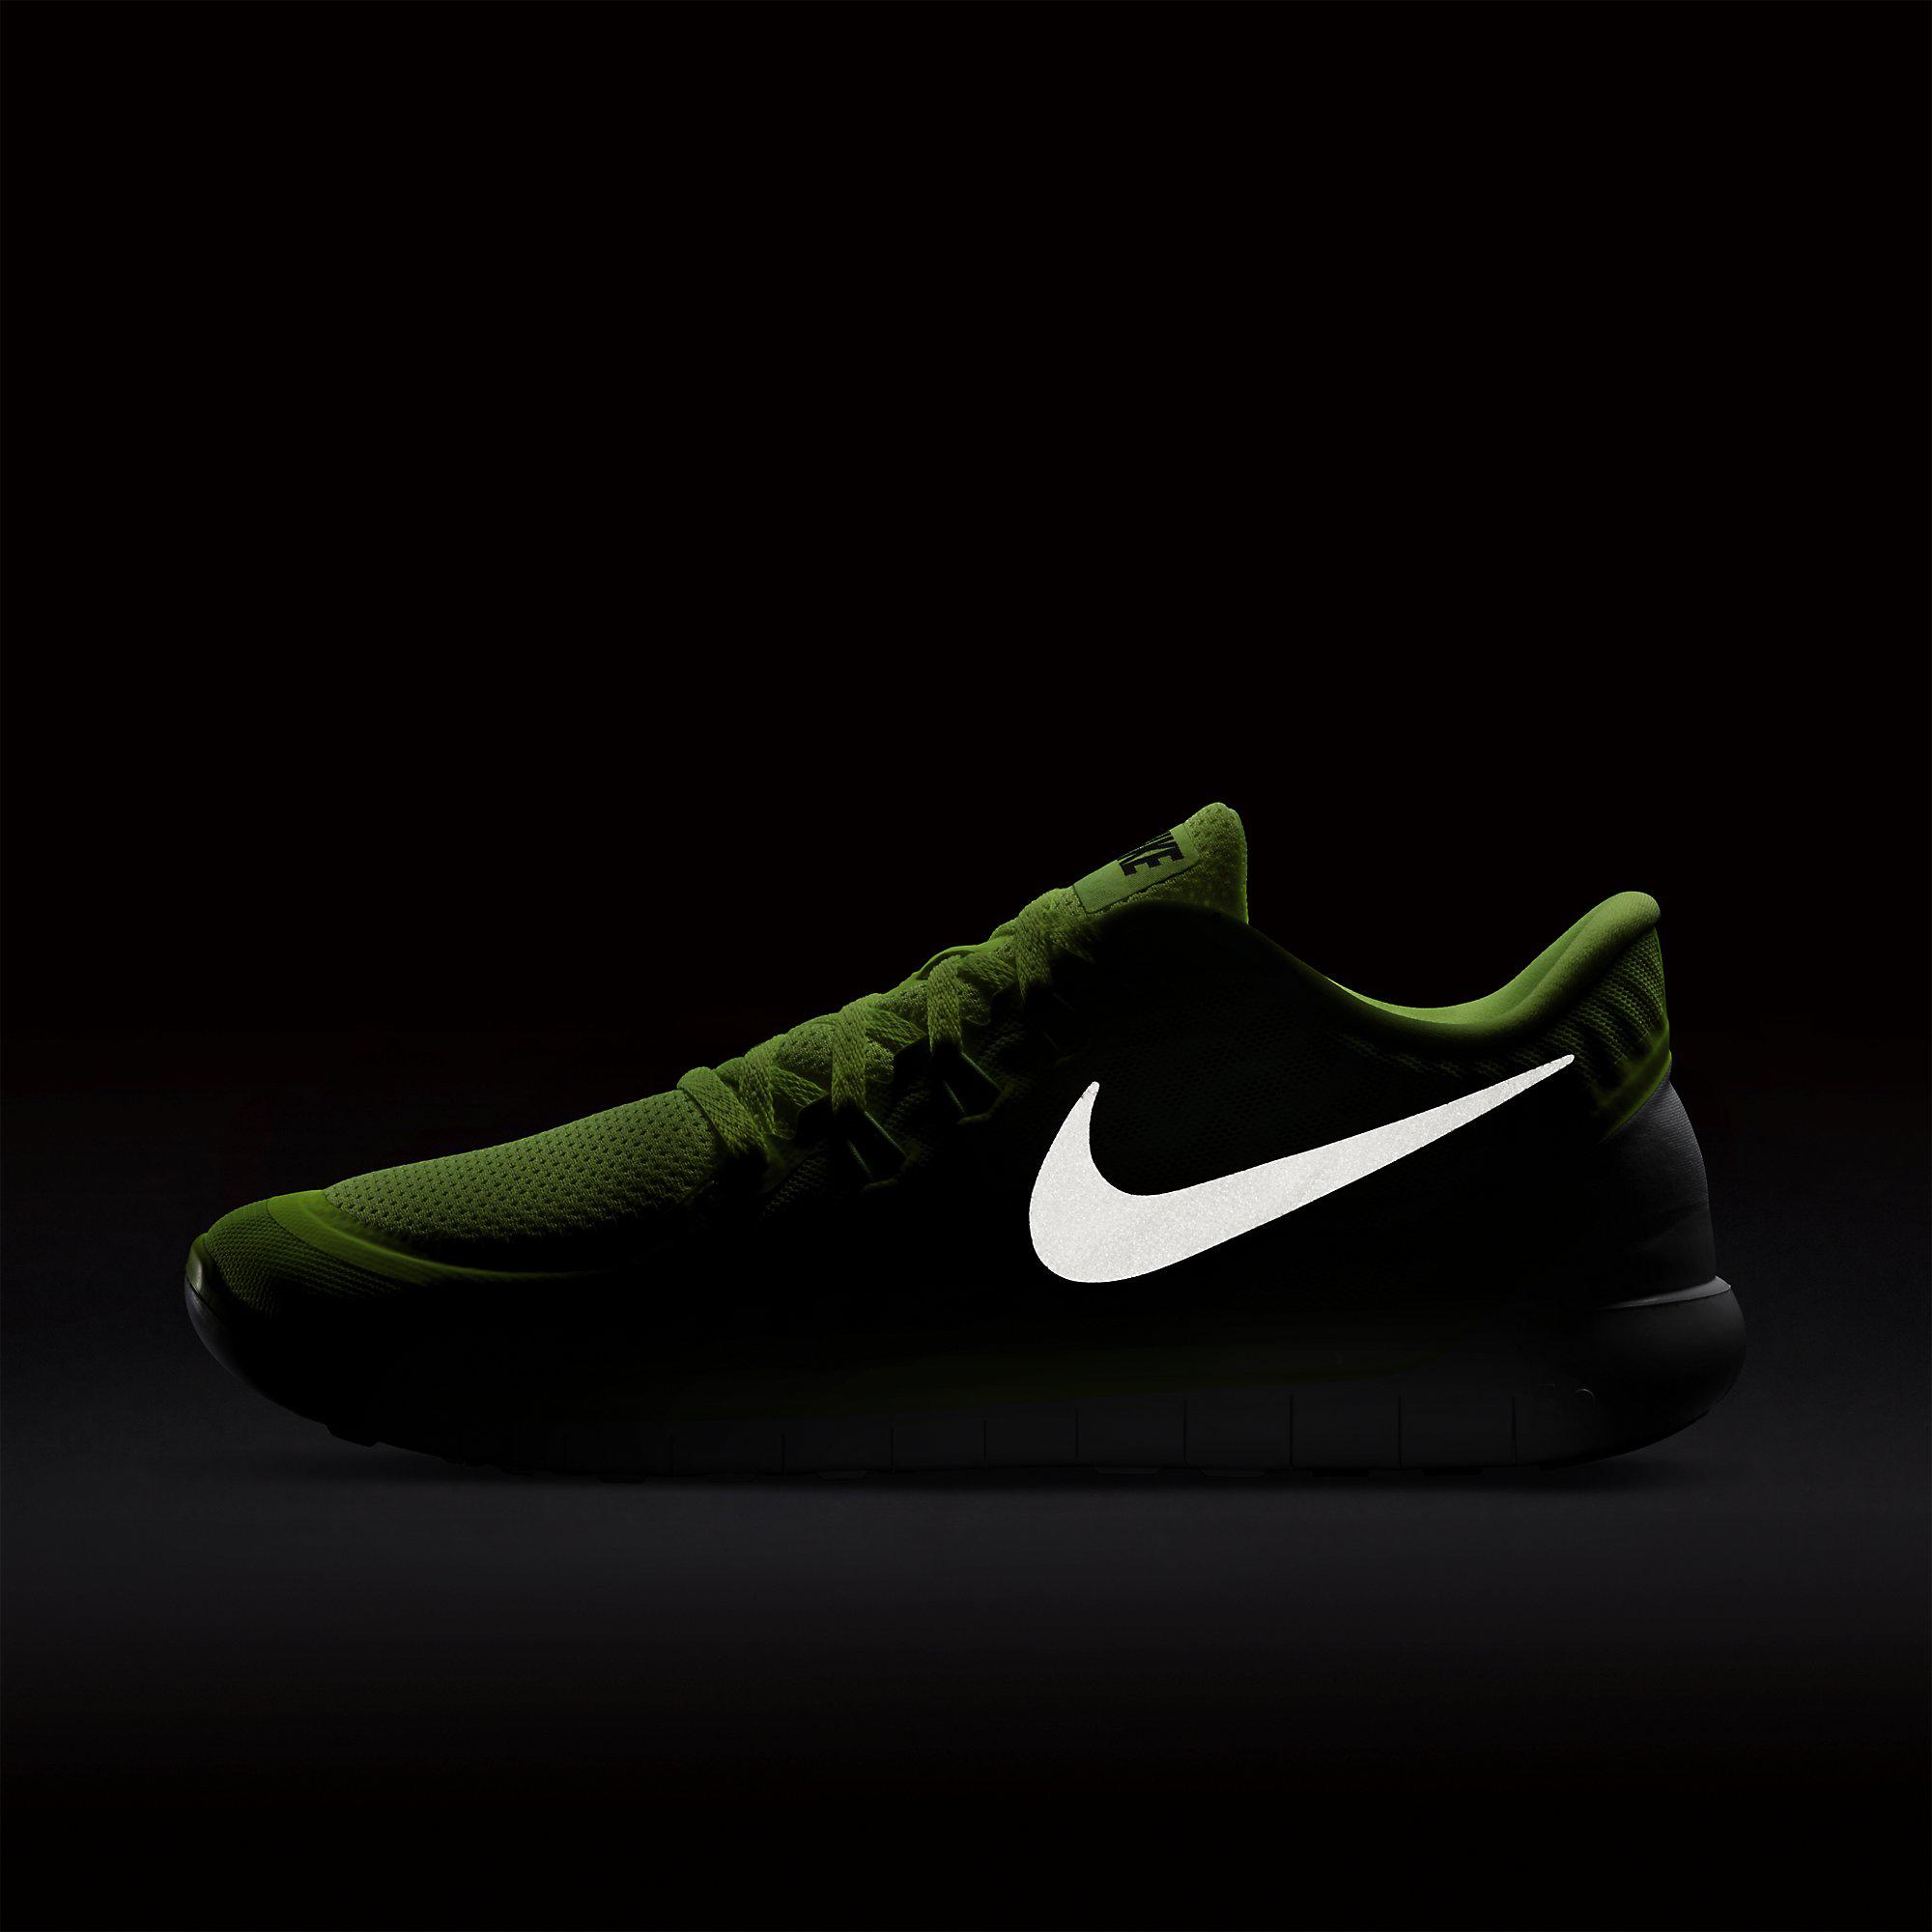 Nike Mens Free 5.0+ Running Shoes - Volt/Electric Green - Tennisnuts.com